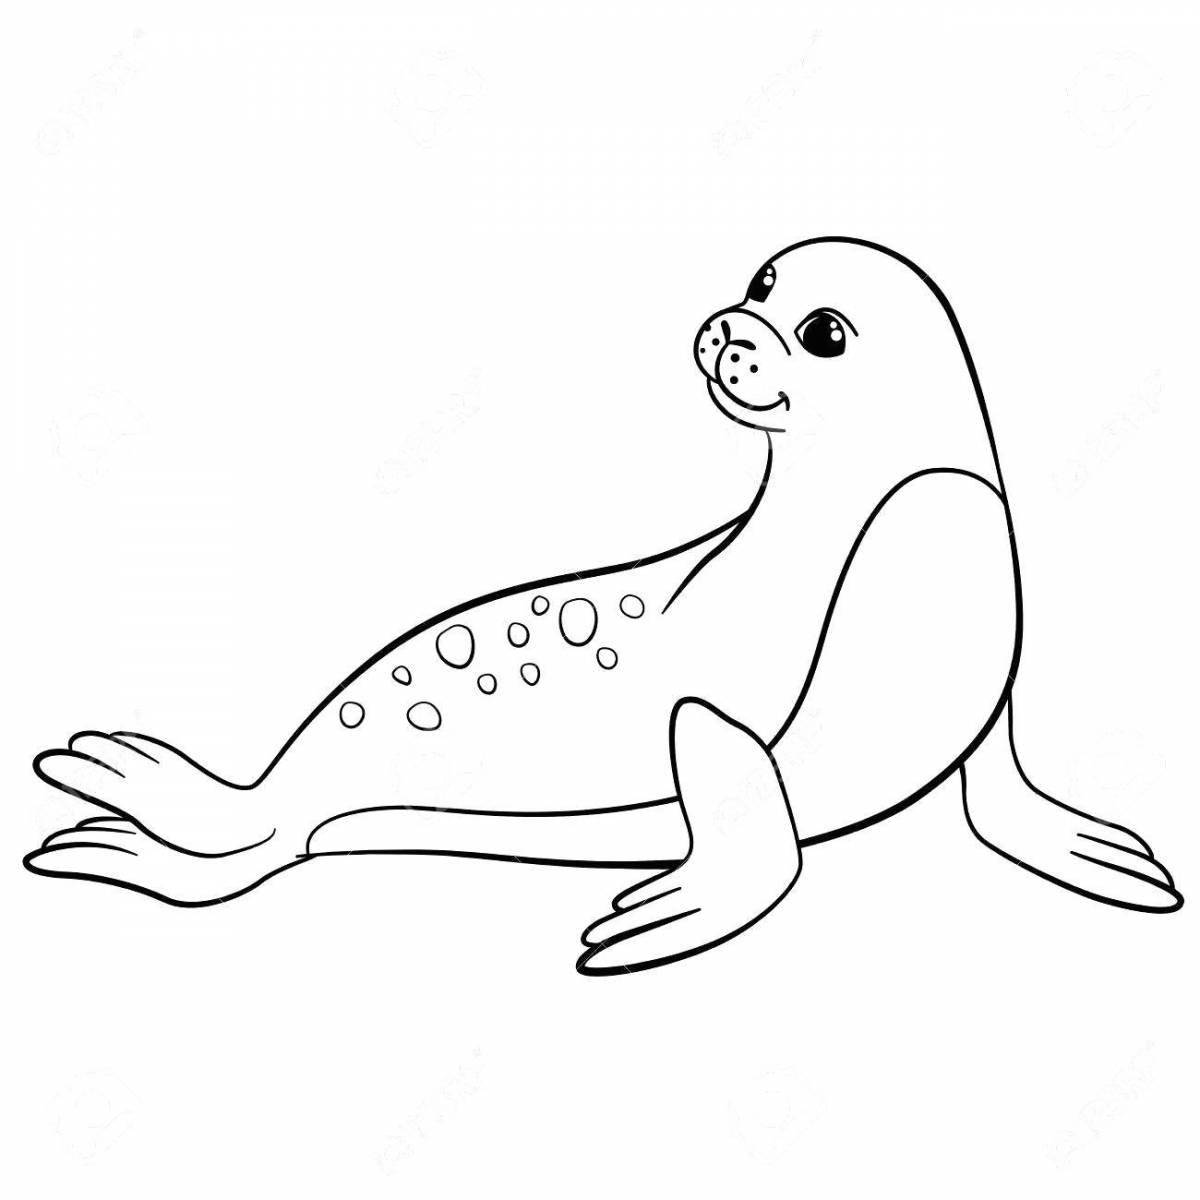 Entertaining fur seal coloring book for kids